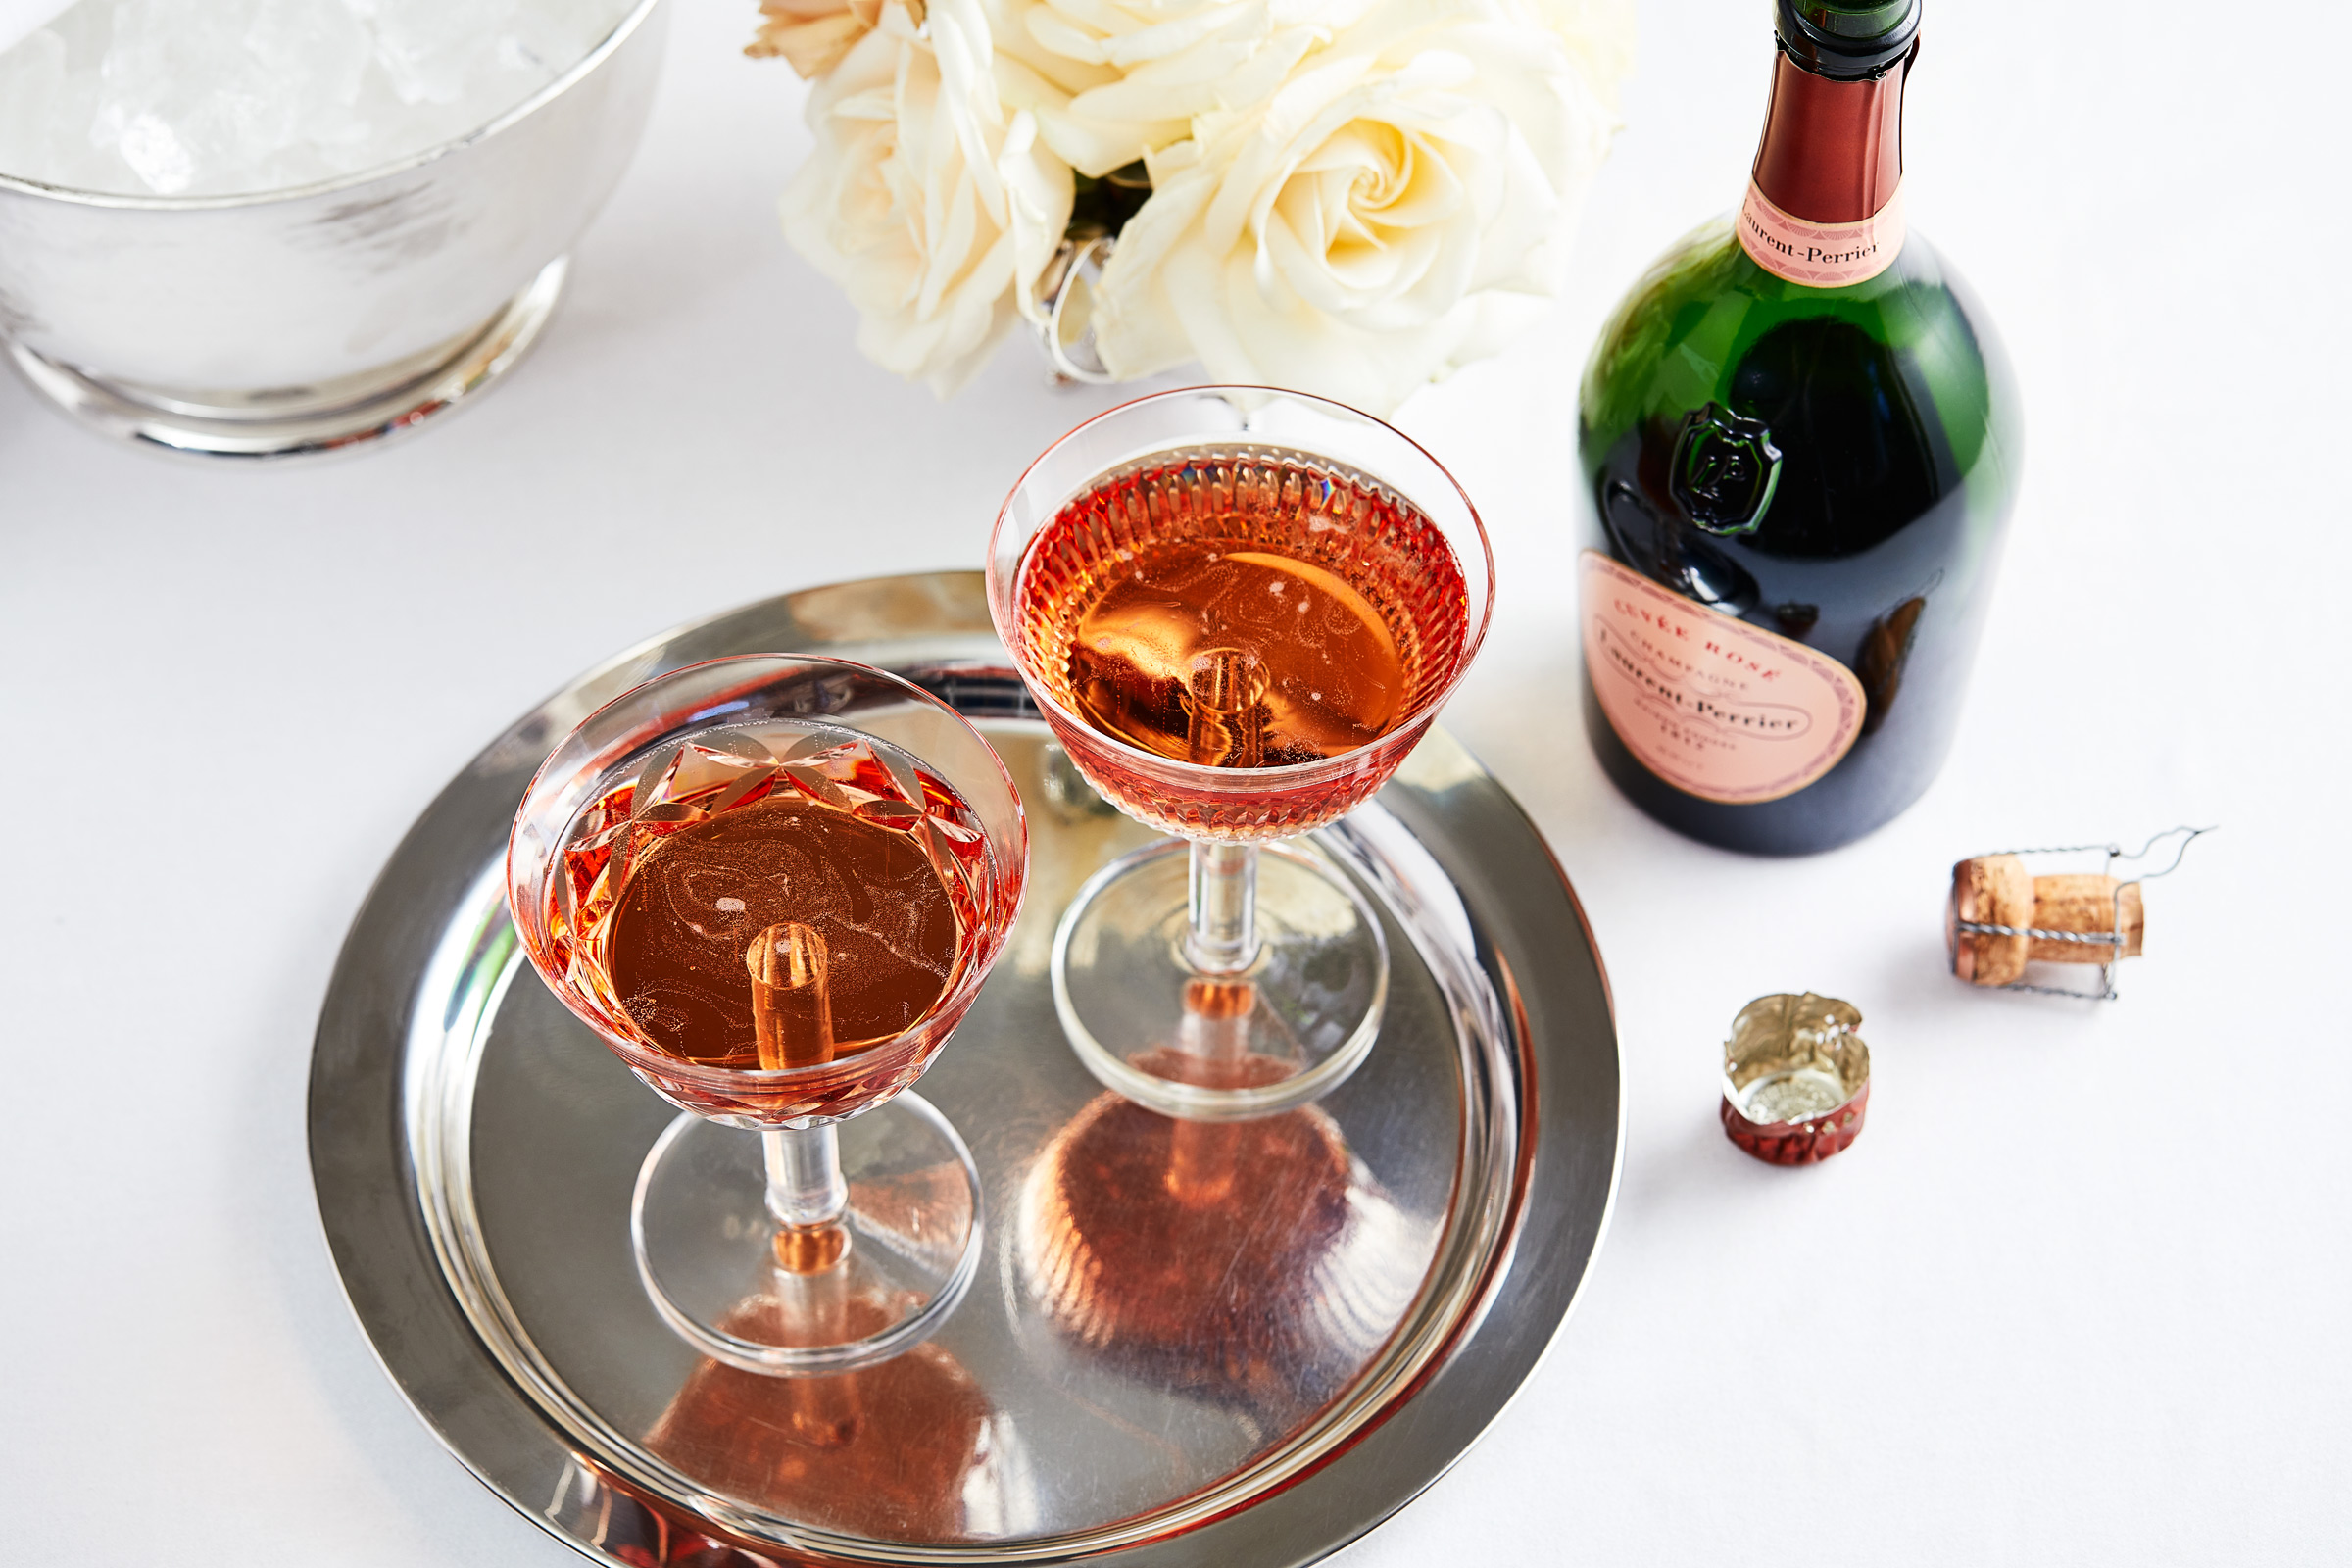 Laurent Perrier Rose Champagne Coupe Glasses, Alastair Ferrier, Edinburgh food photographer.